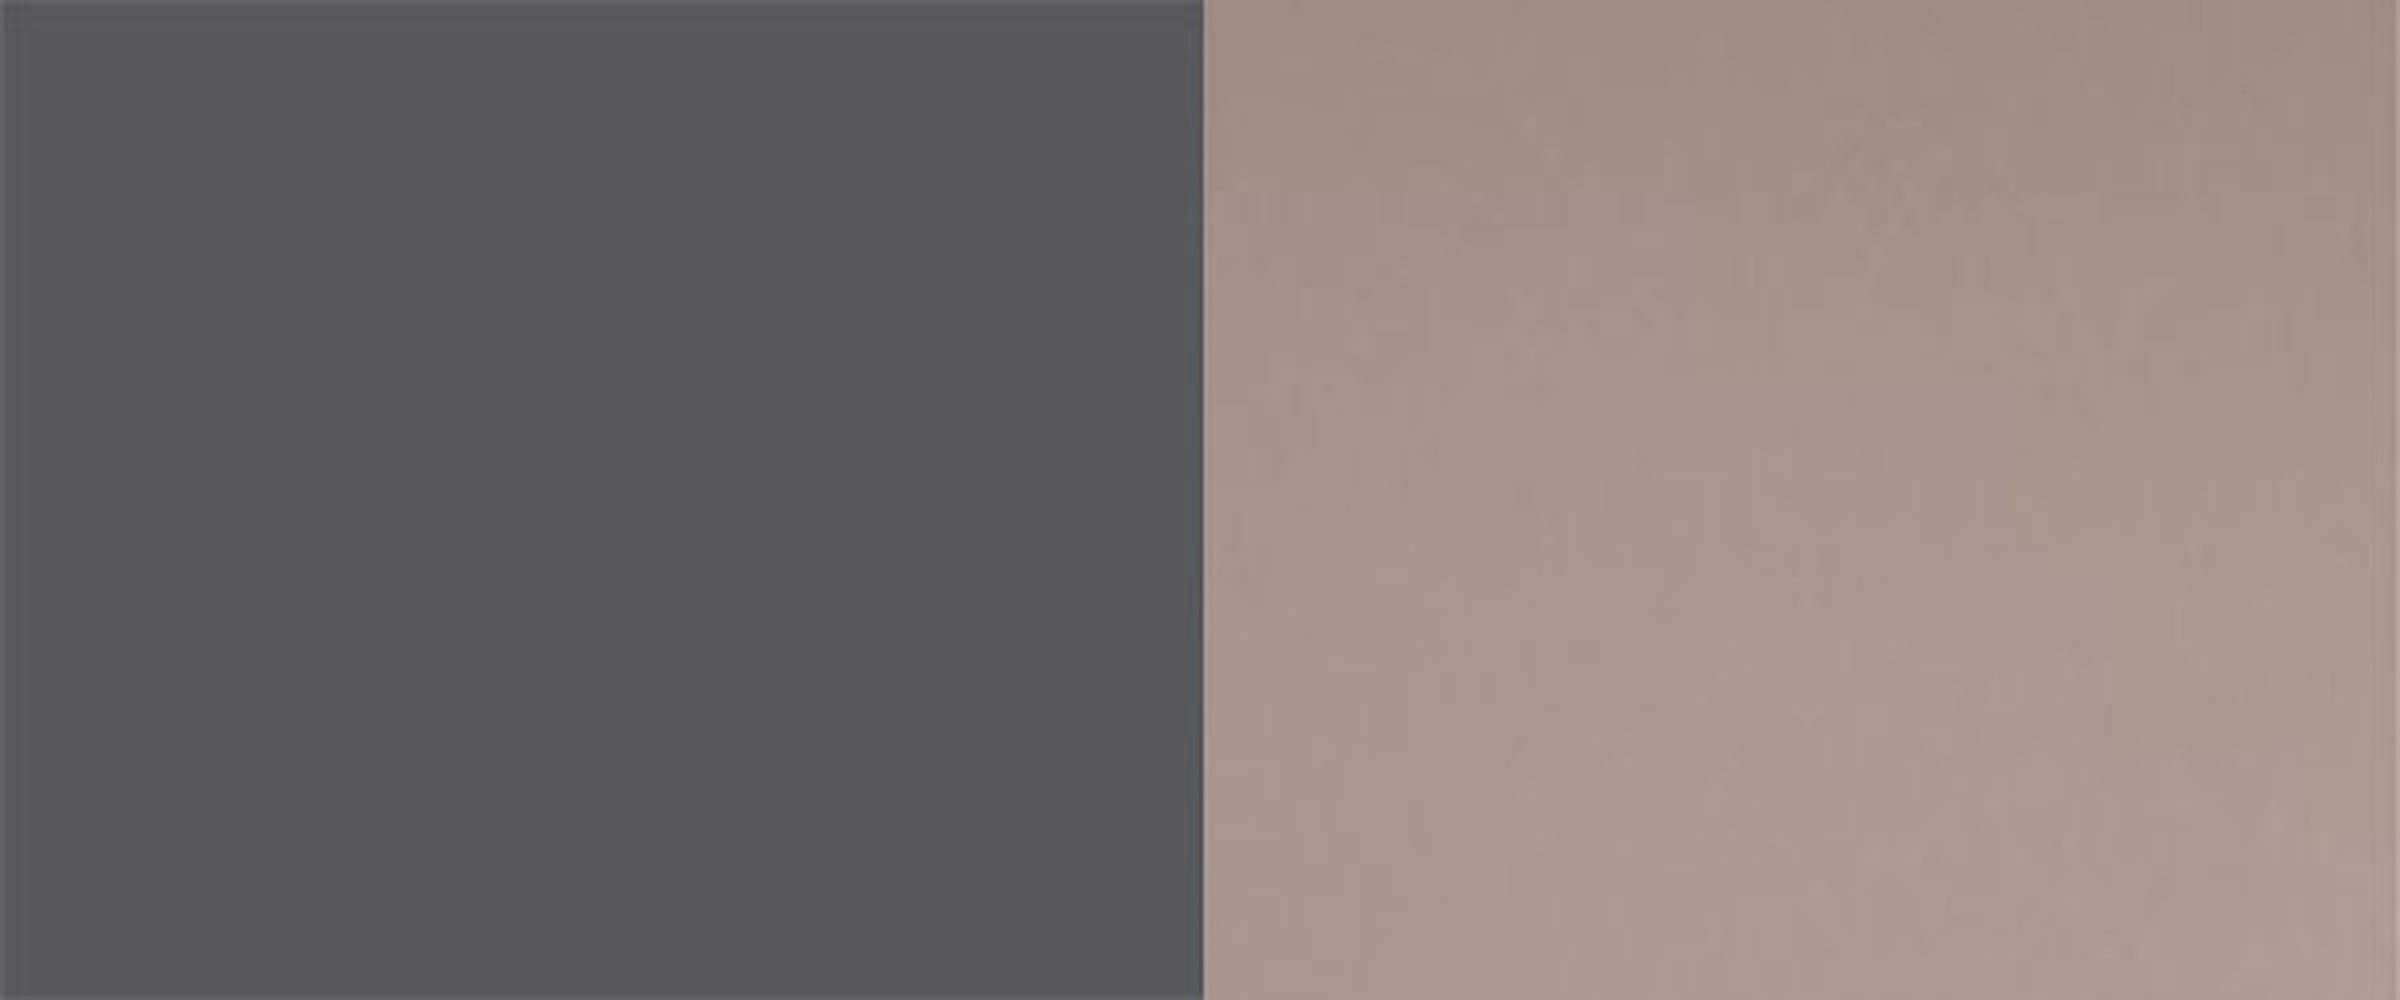 90cm Klappe Feldmann-Wohnen / rosé Küchenschrank matt Klapphängeschrank mit BO-W4B/90-AV Farbe Bonn wählbar lava kupfer